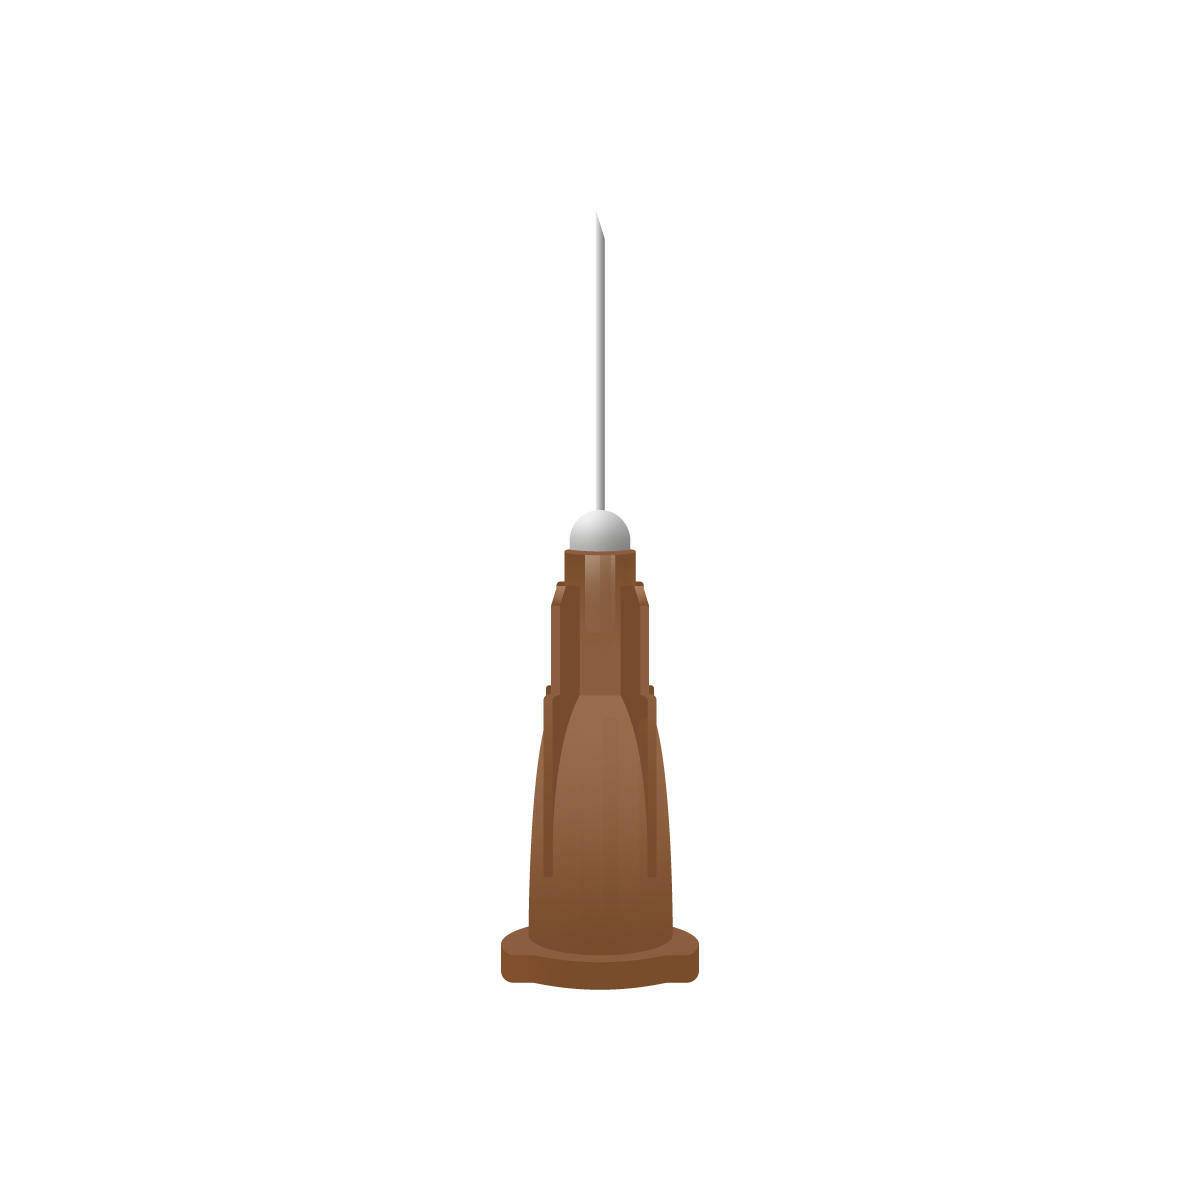 26g Brown 0.5 inch Terumo Needles (13mm x 0.45mm) - UKMEDI